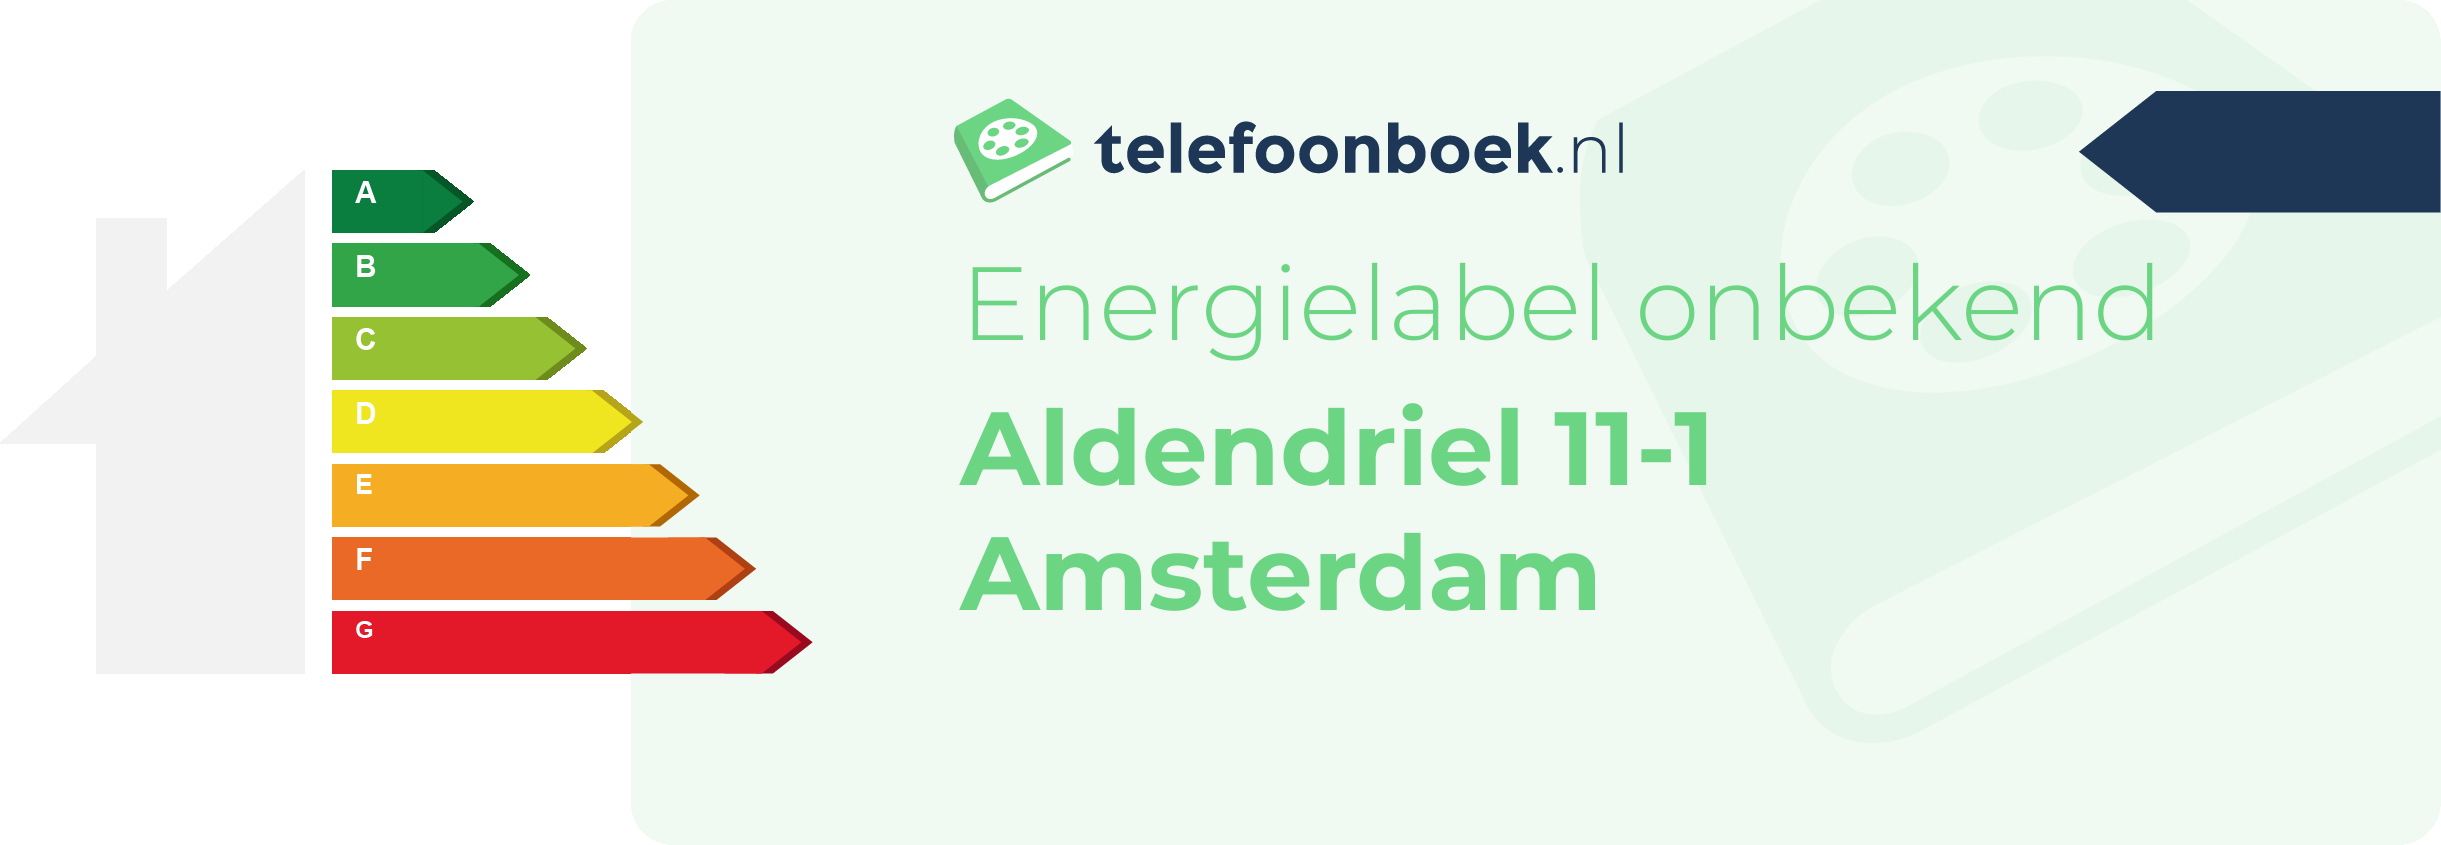 Energielabel Aldendriel 11-1 Amsterdam